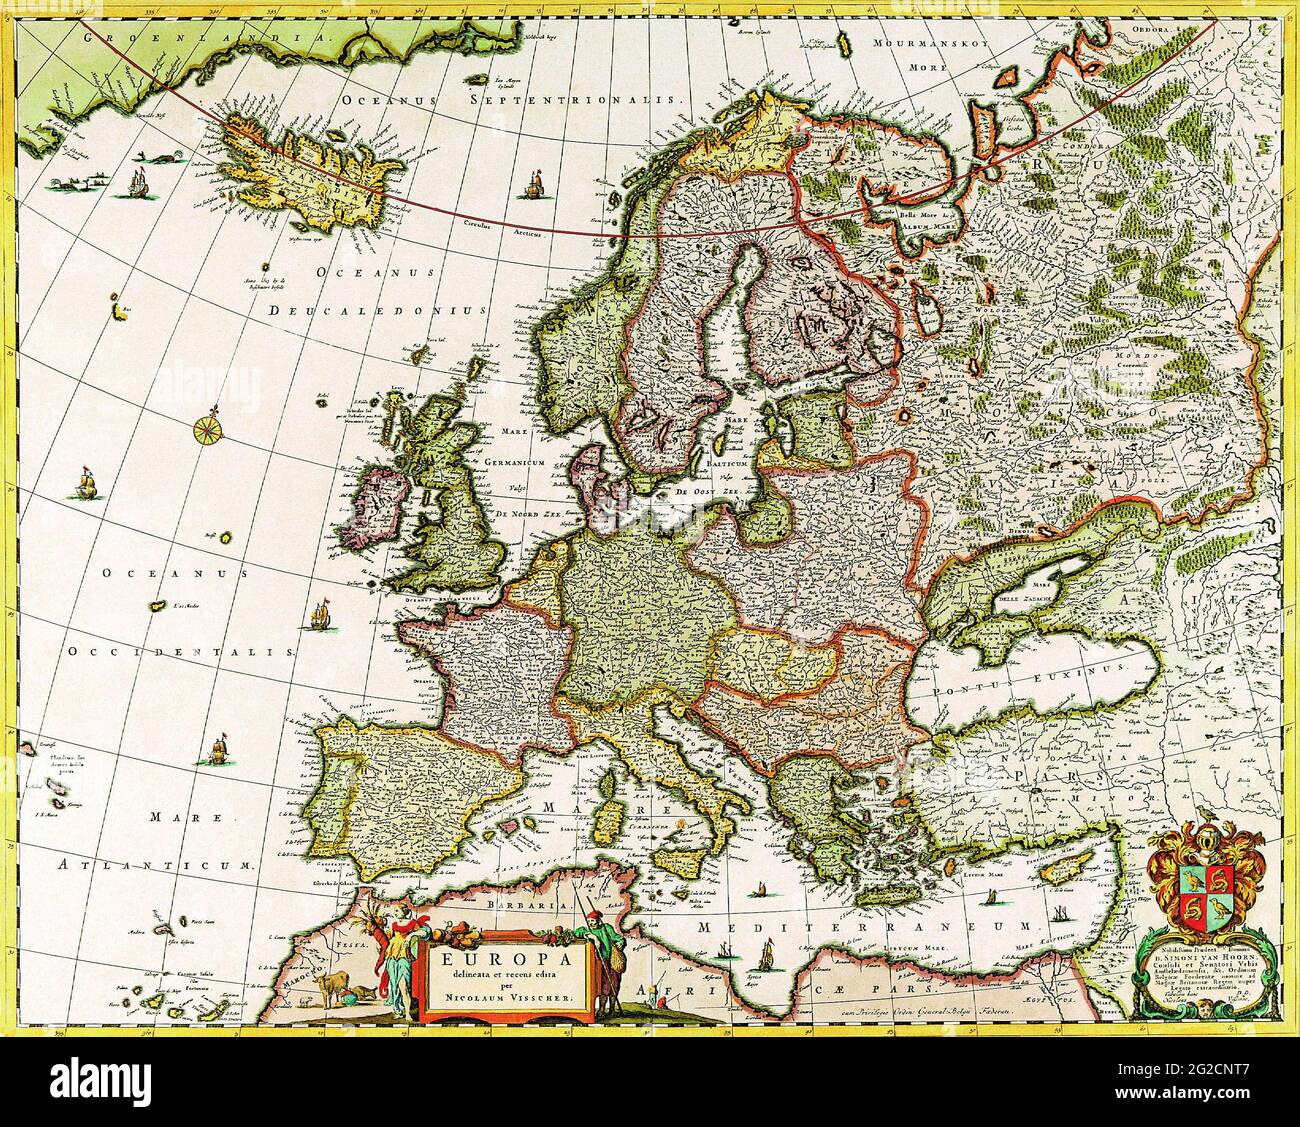 Old Europe Map, Retro Europe Map, Vintage Europe Map, Antique Europe Map, Antique Maps of the World, Map of Europe, Europe Map, Nicolas Visscher, 1640 Stock Photo